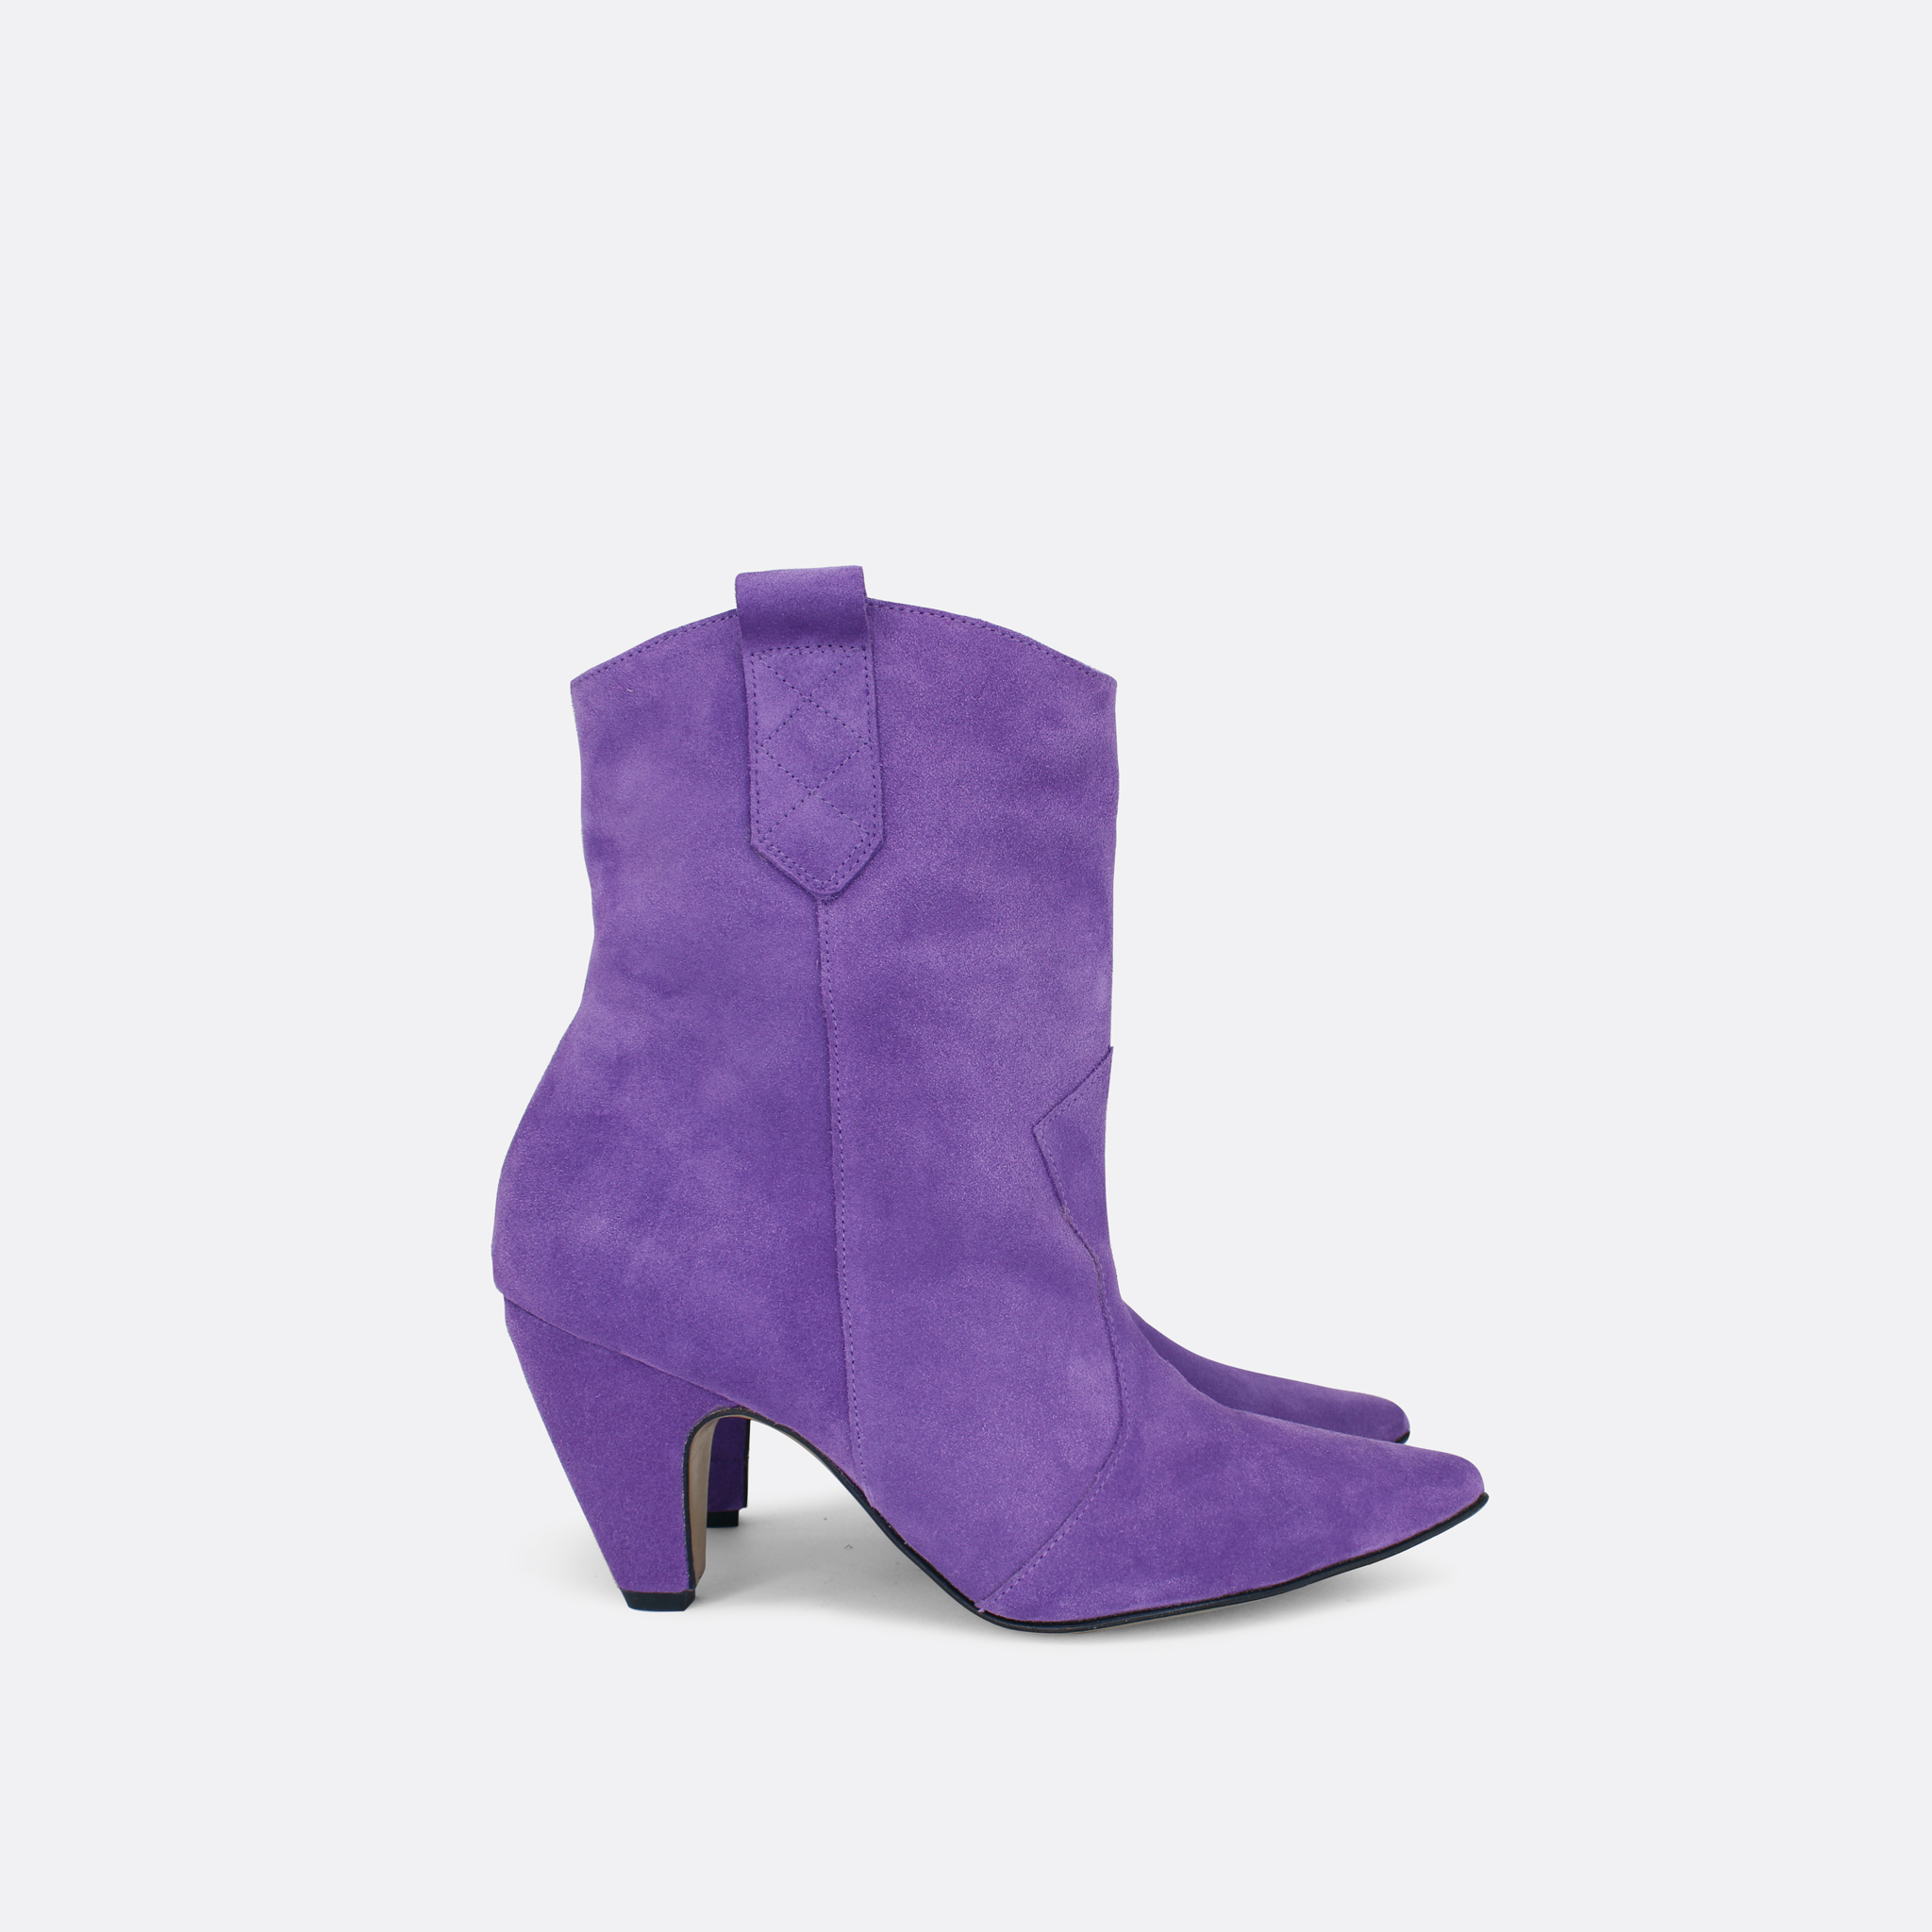 785c Boots purple 04 - Lilu shoes